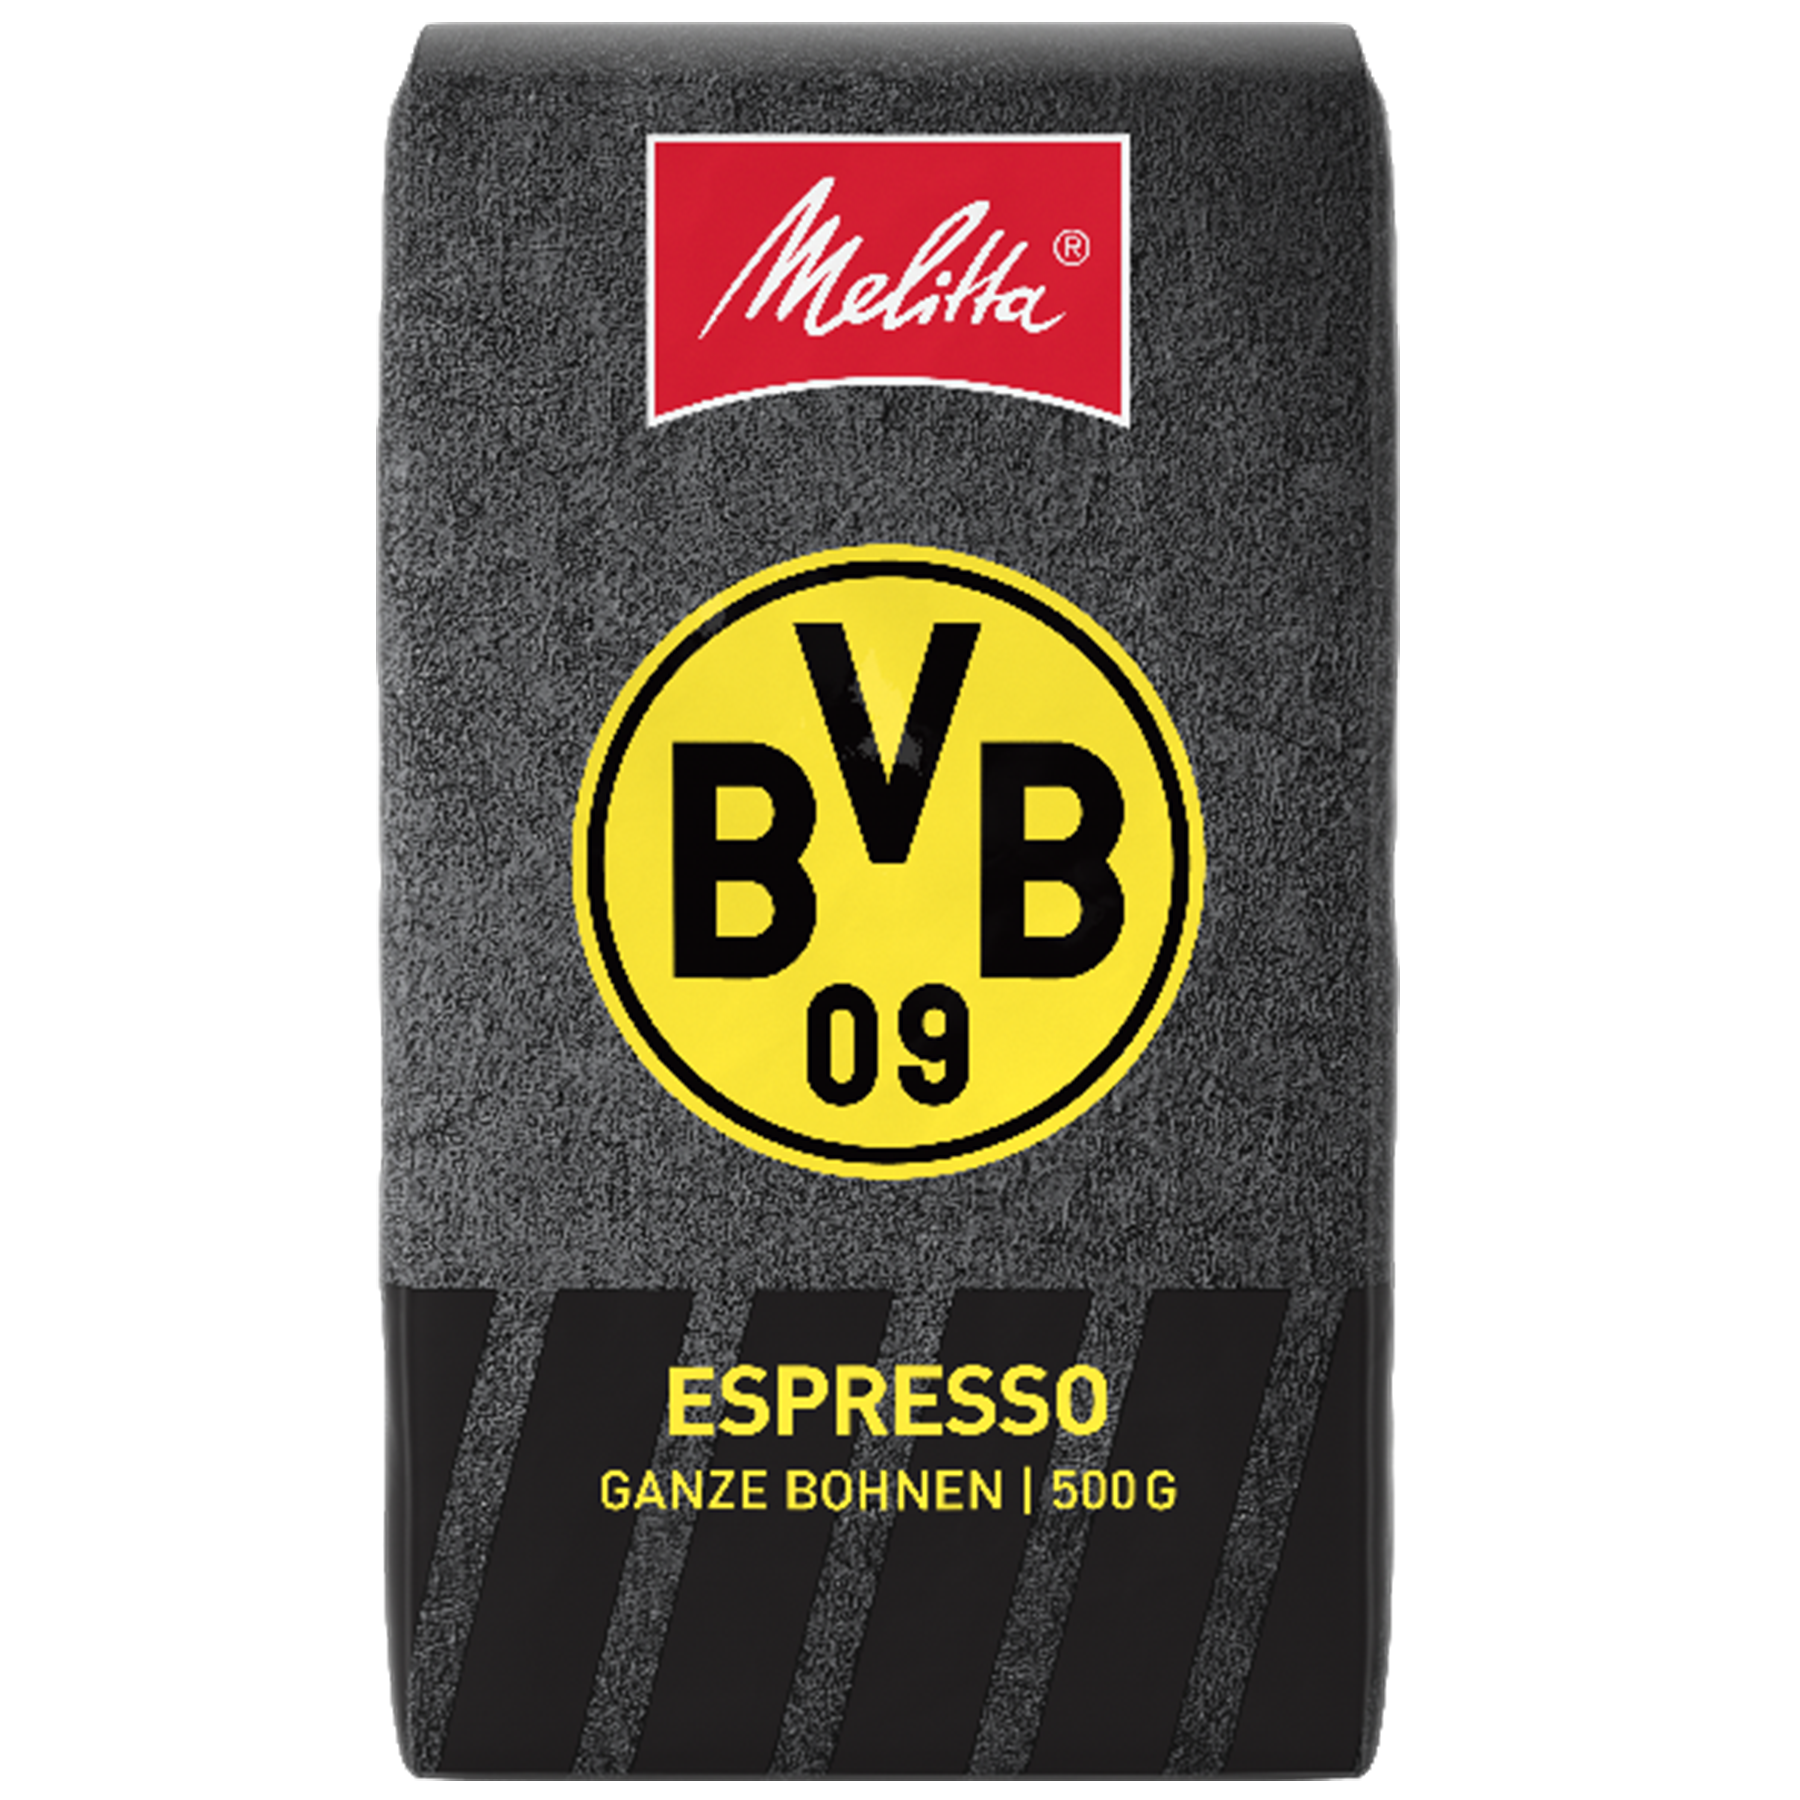 Melitta® BVB Espresso